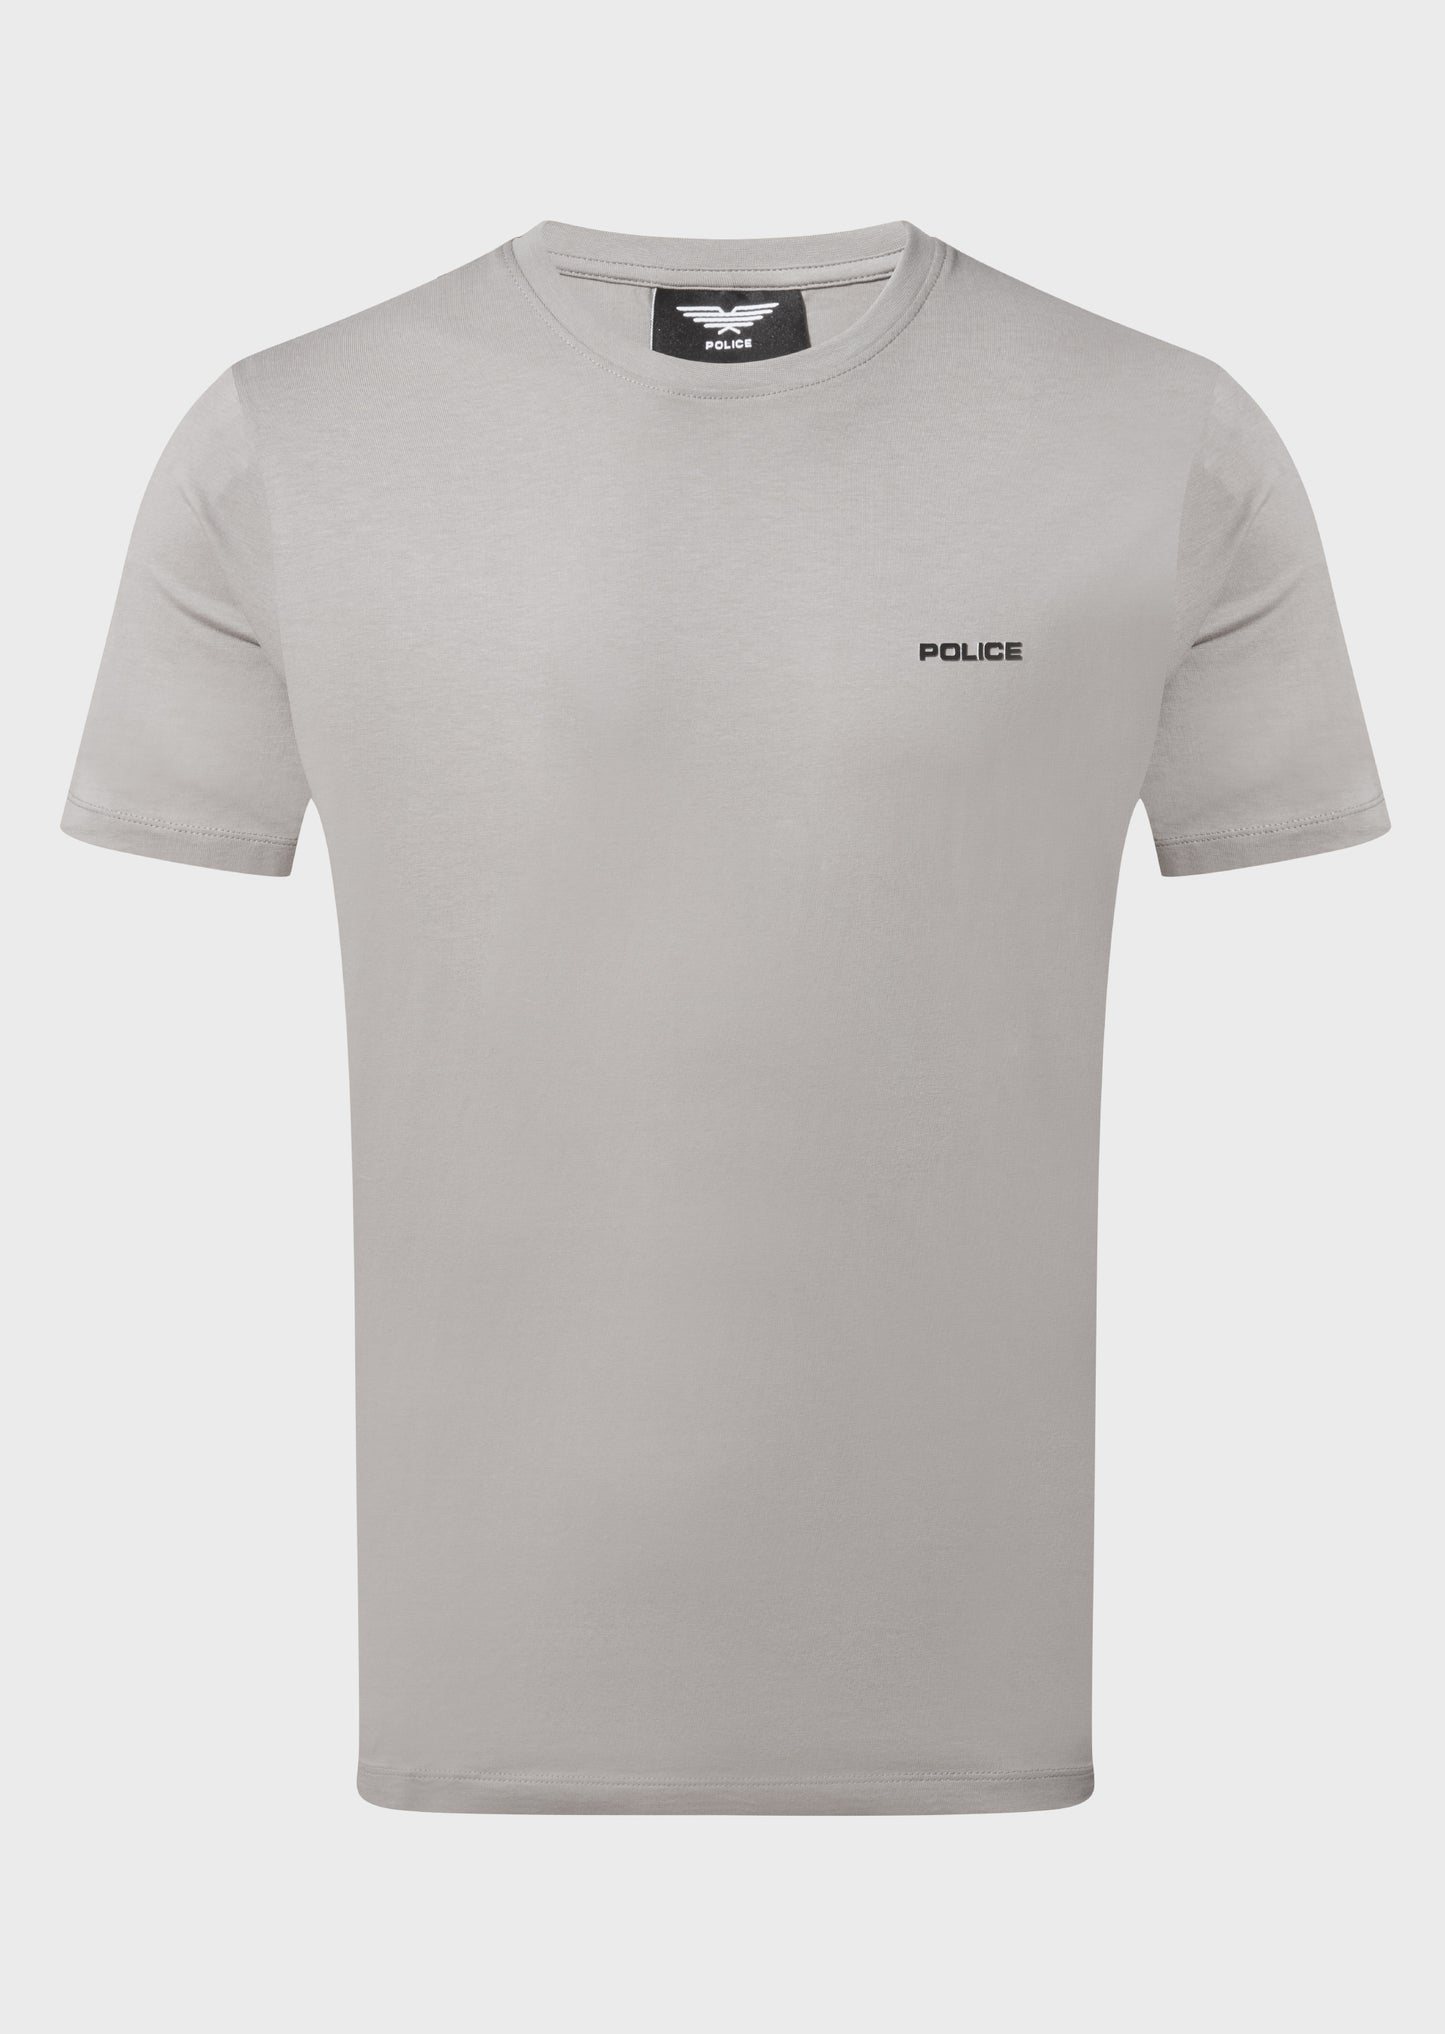 Piastri Stone Grey T-Shirt